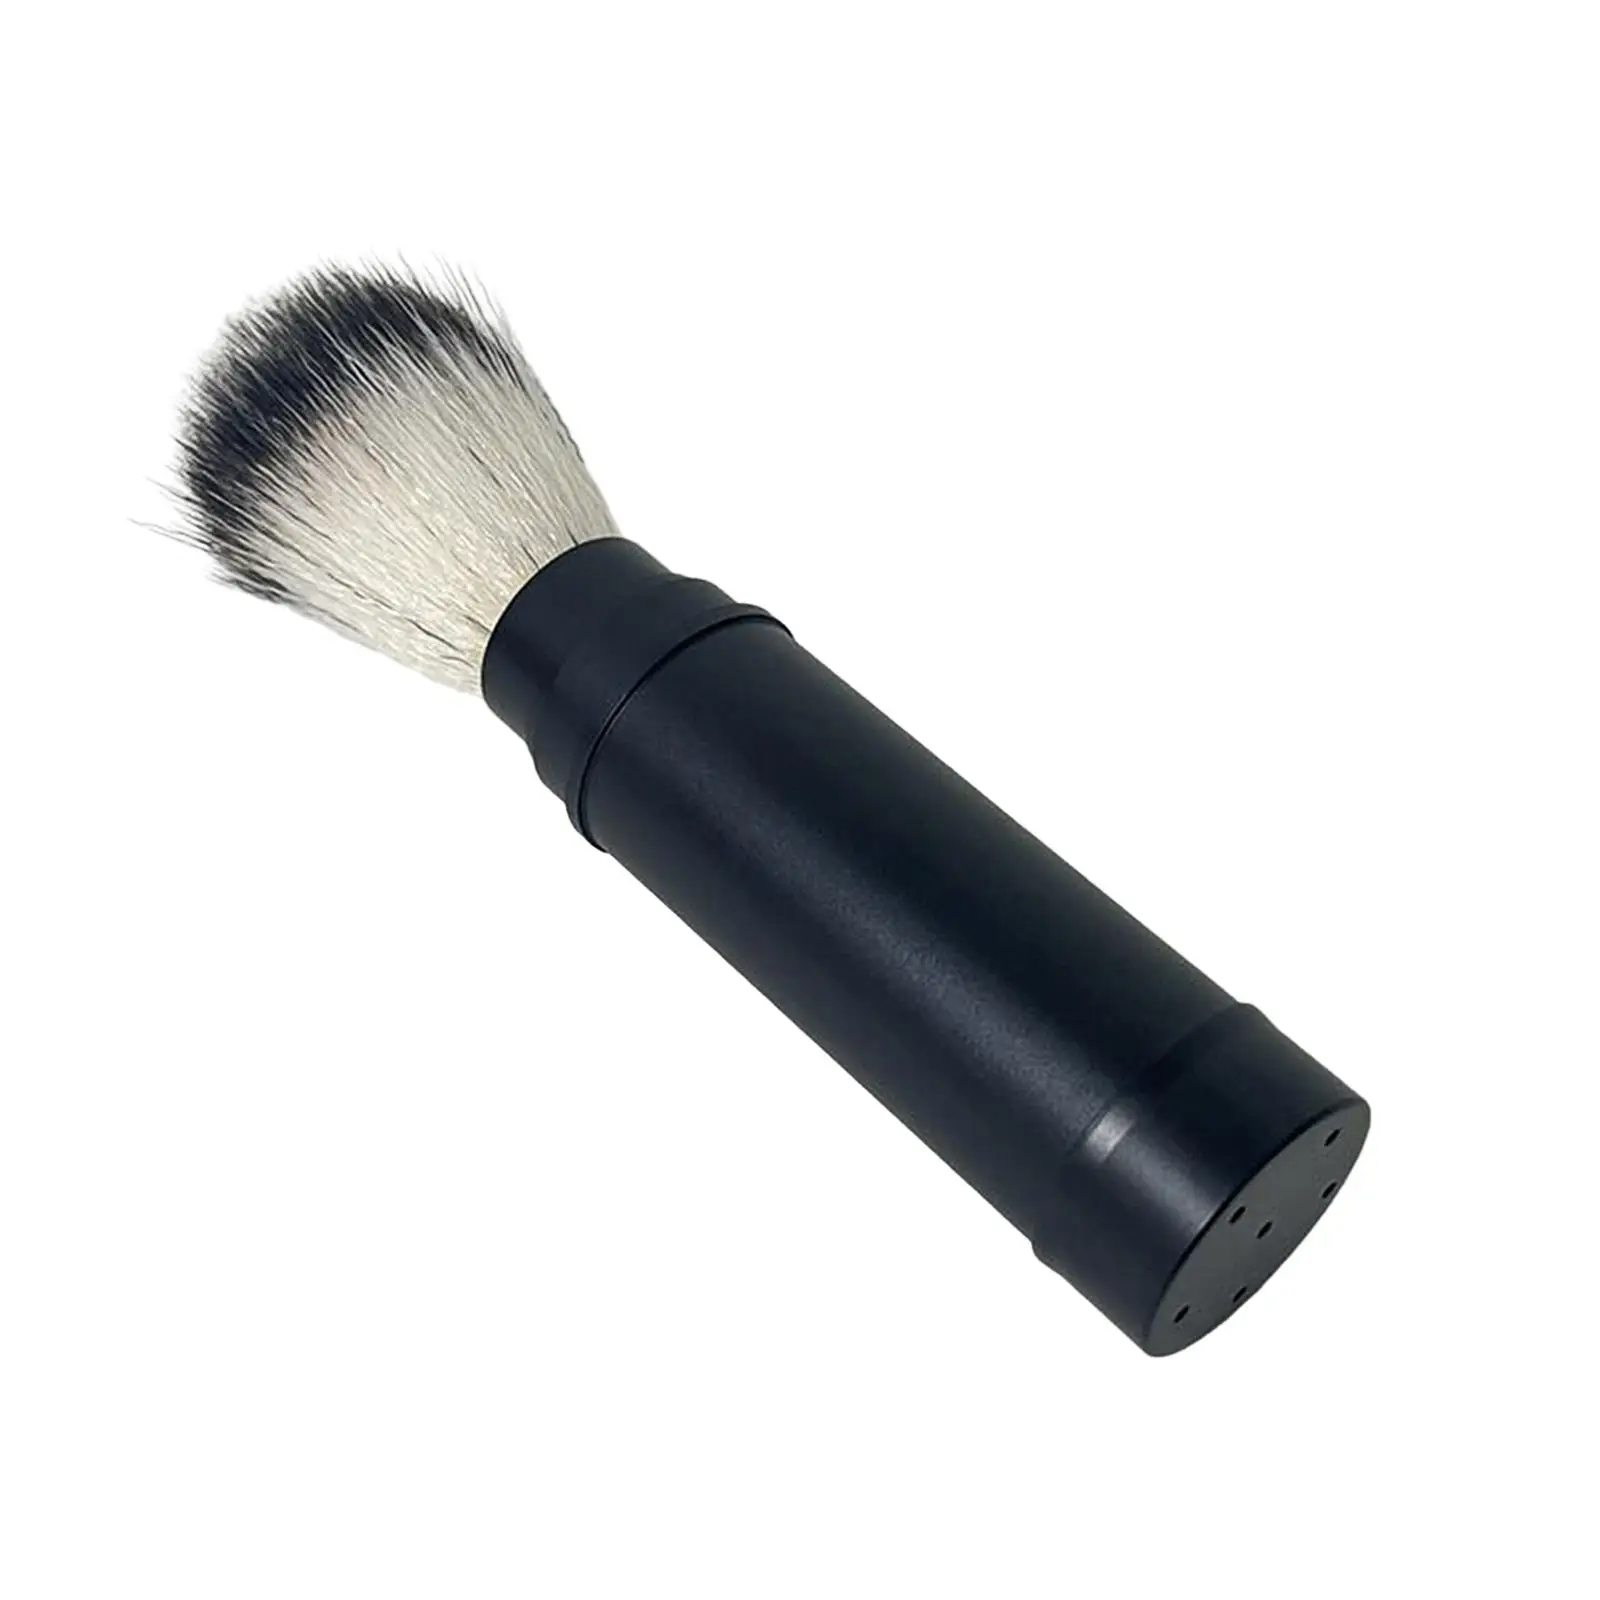 Men Shaving Brush Professional Hair Salon Tool Accessories Easy Foaming Birthday Gift Cream Soap Brush for Barbershop Salon Home